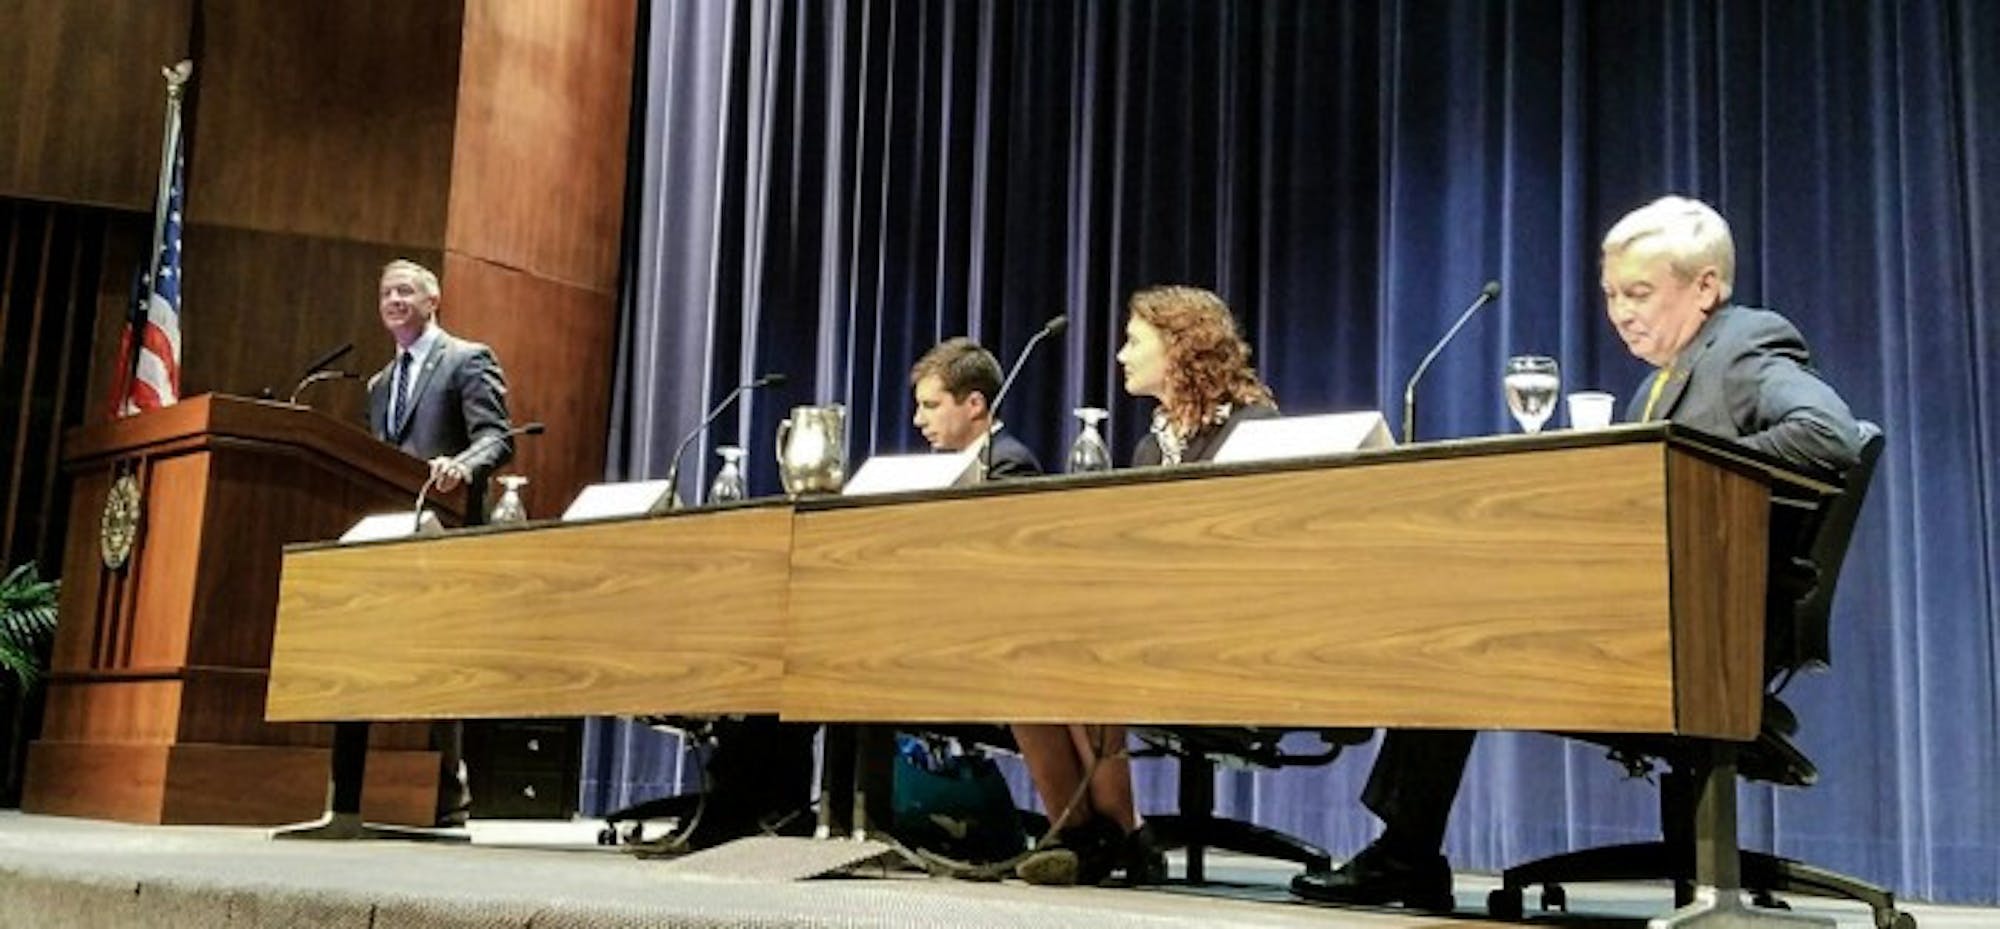 Governor Martin O'Malley, Mayor Pete Butigieg, junior Alicia Czarnecki and vice president for research Robert Bernhard sit at Thursday night's panel in McKenna Hall.